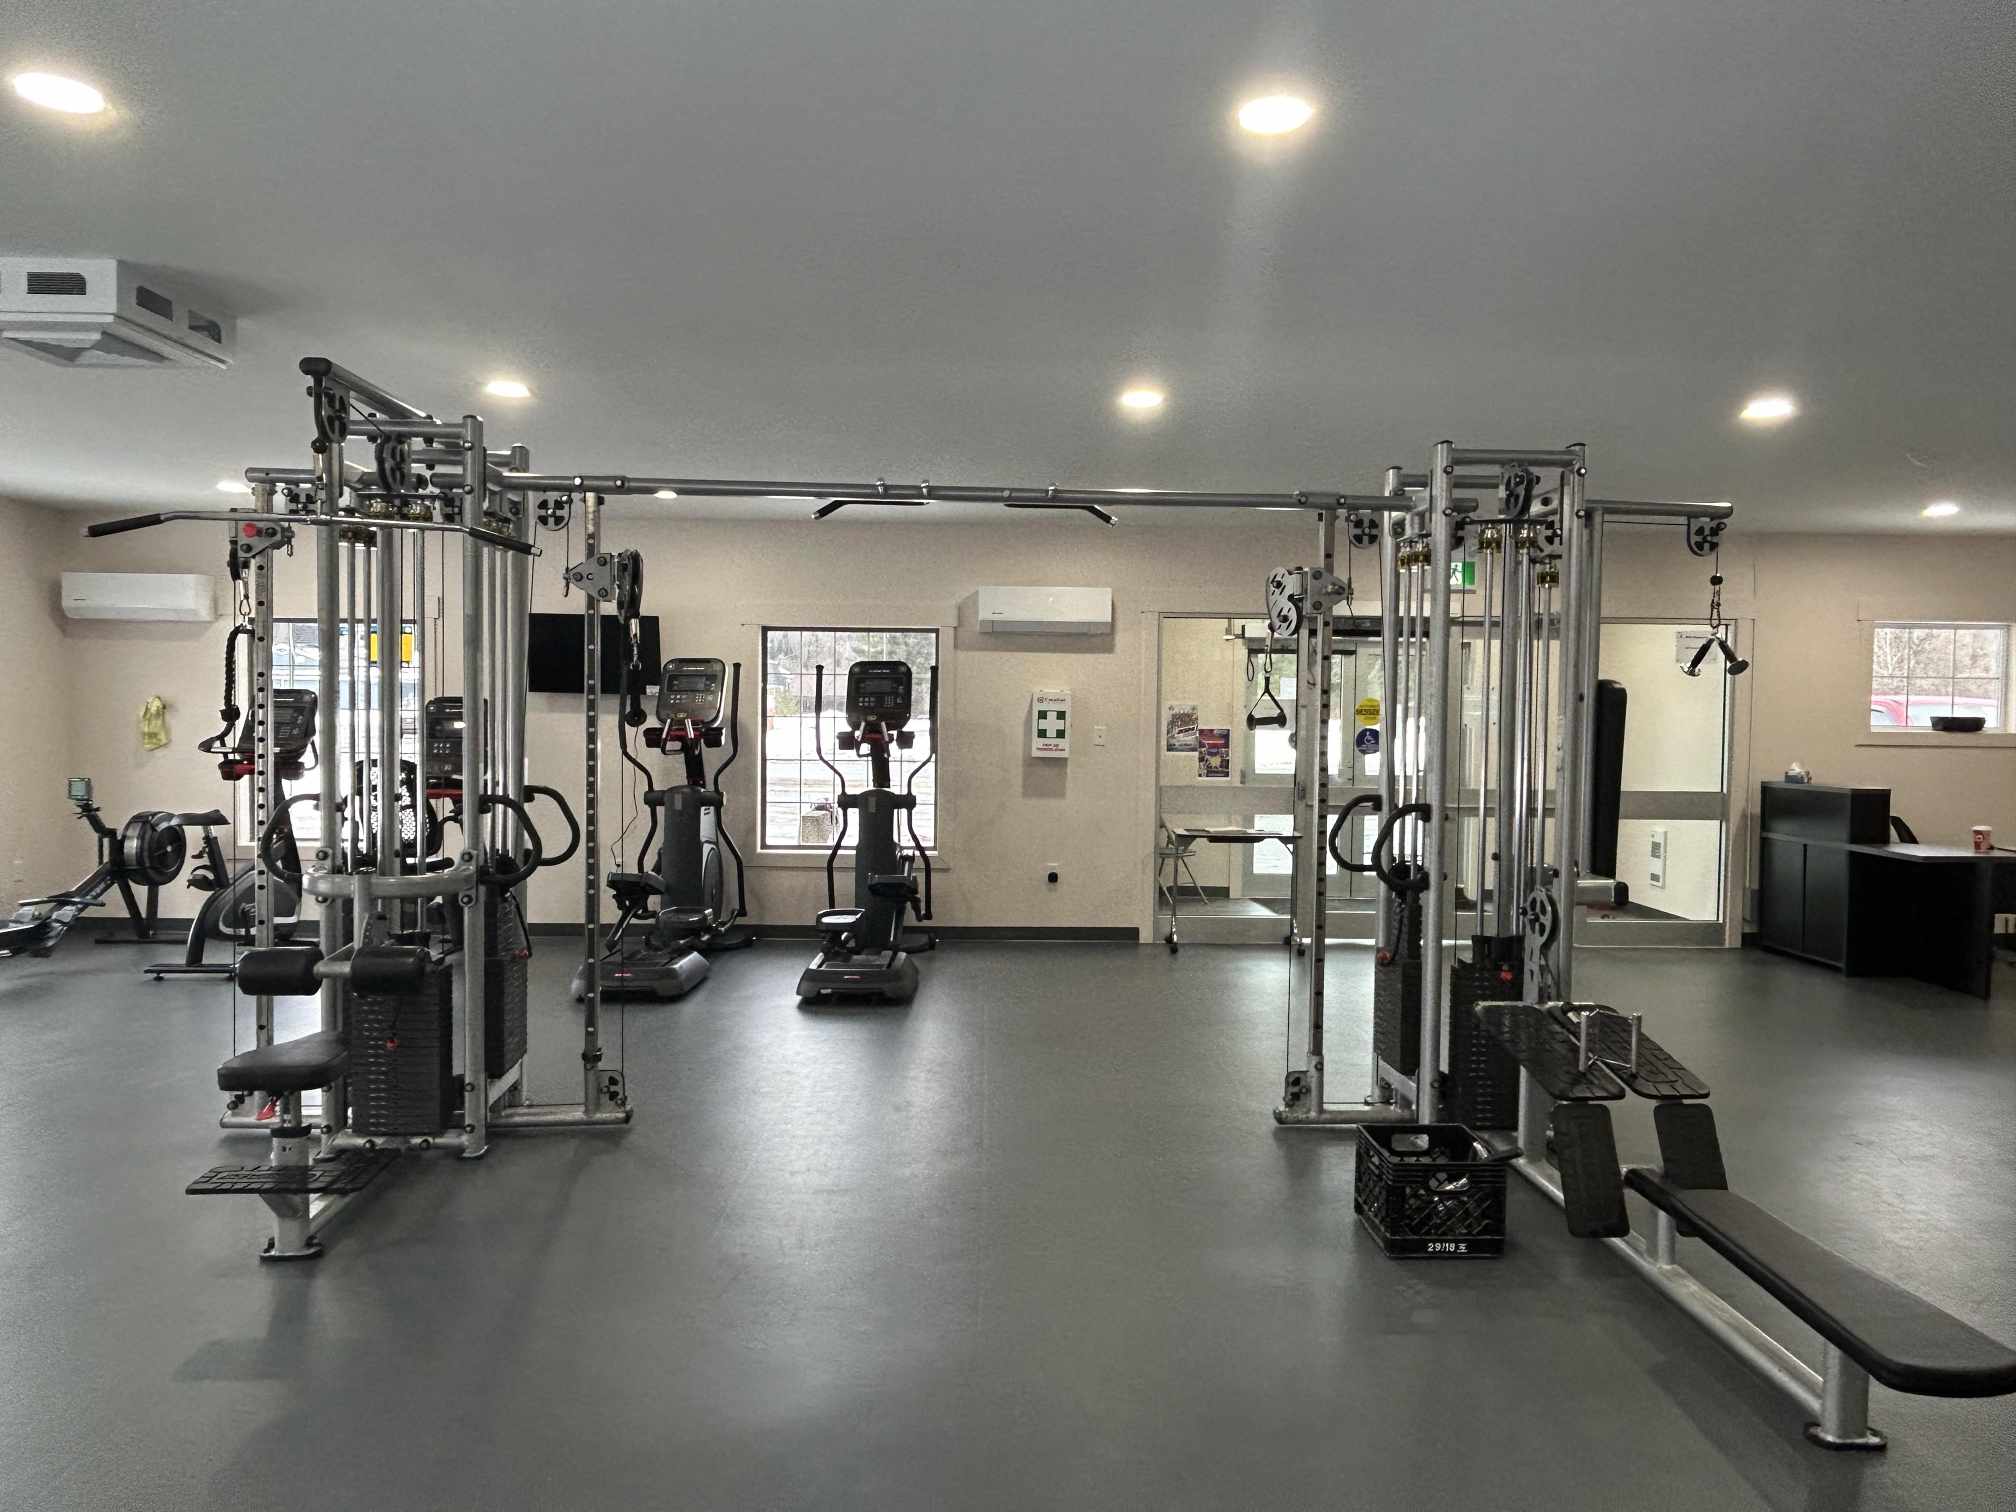 Doaktown Fitness Centre 5